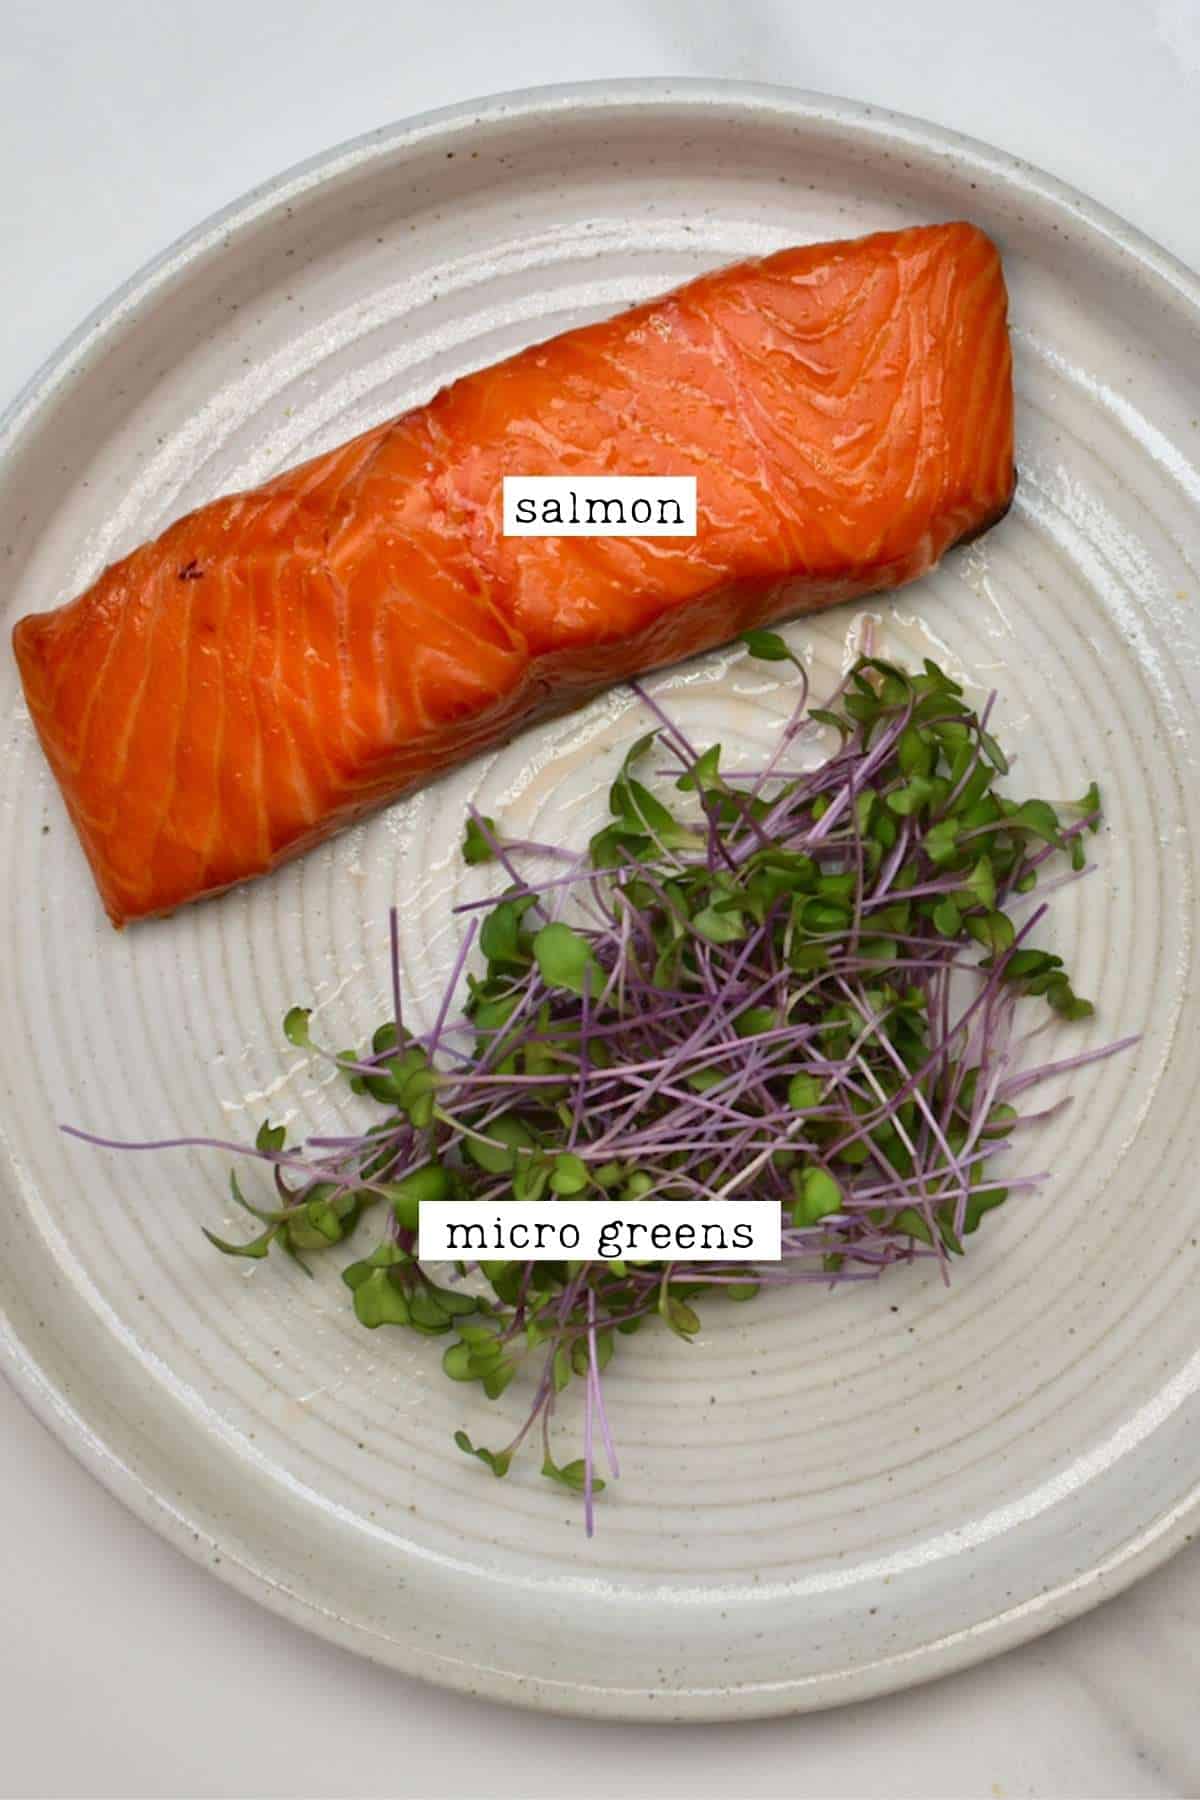 Salmon and micro greens